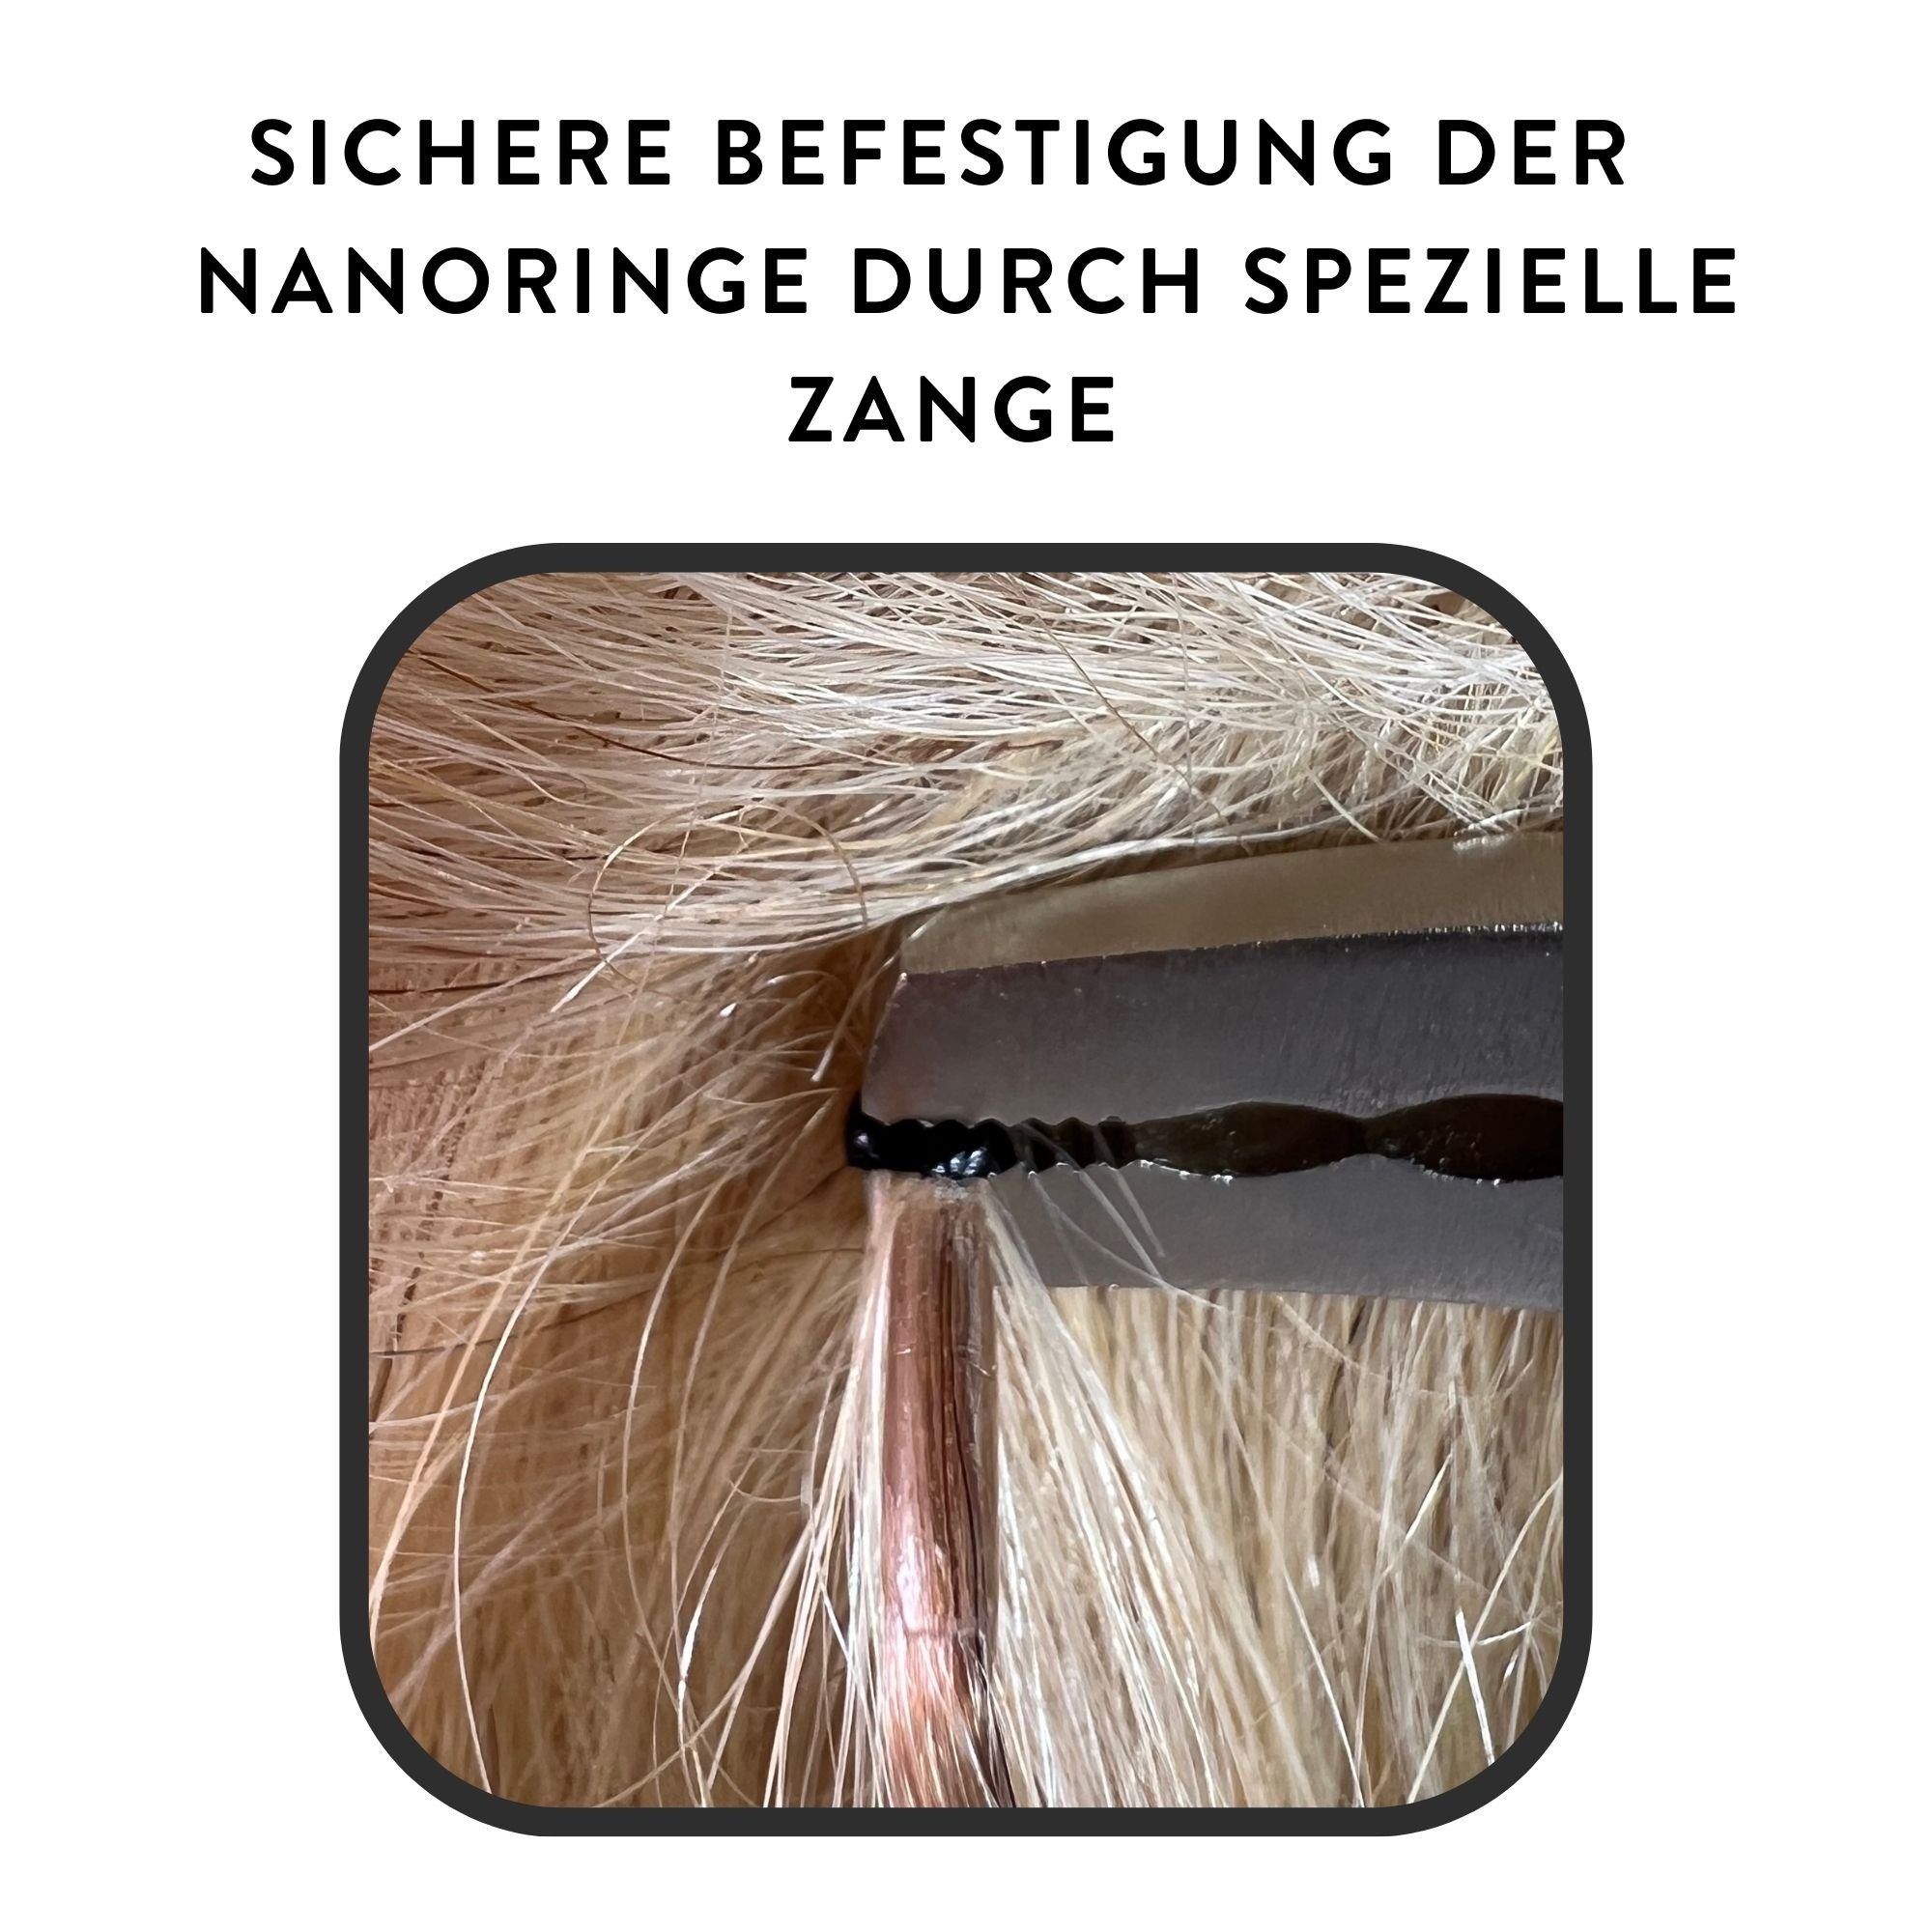 #6 Nanorings ohne Silikoneinlage hair2heart Echthaar-Extension